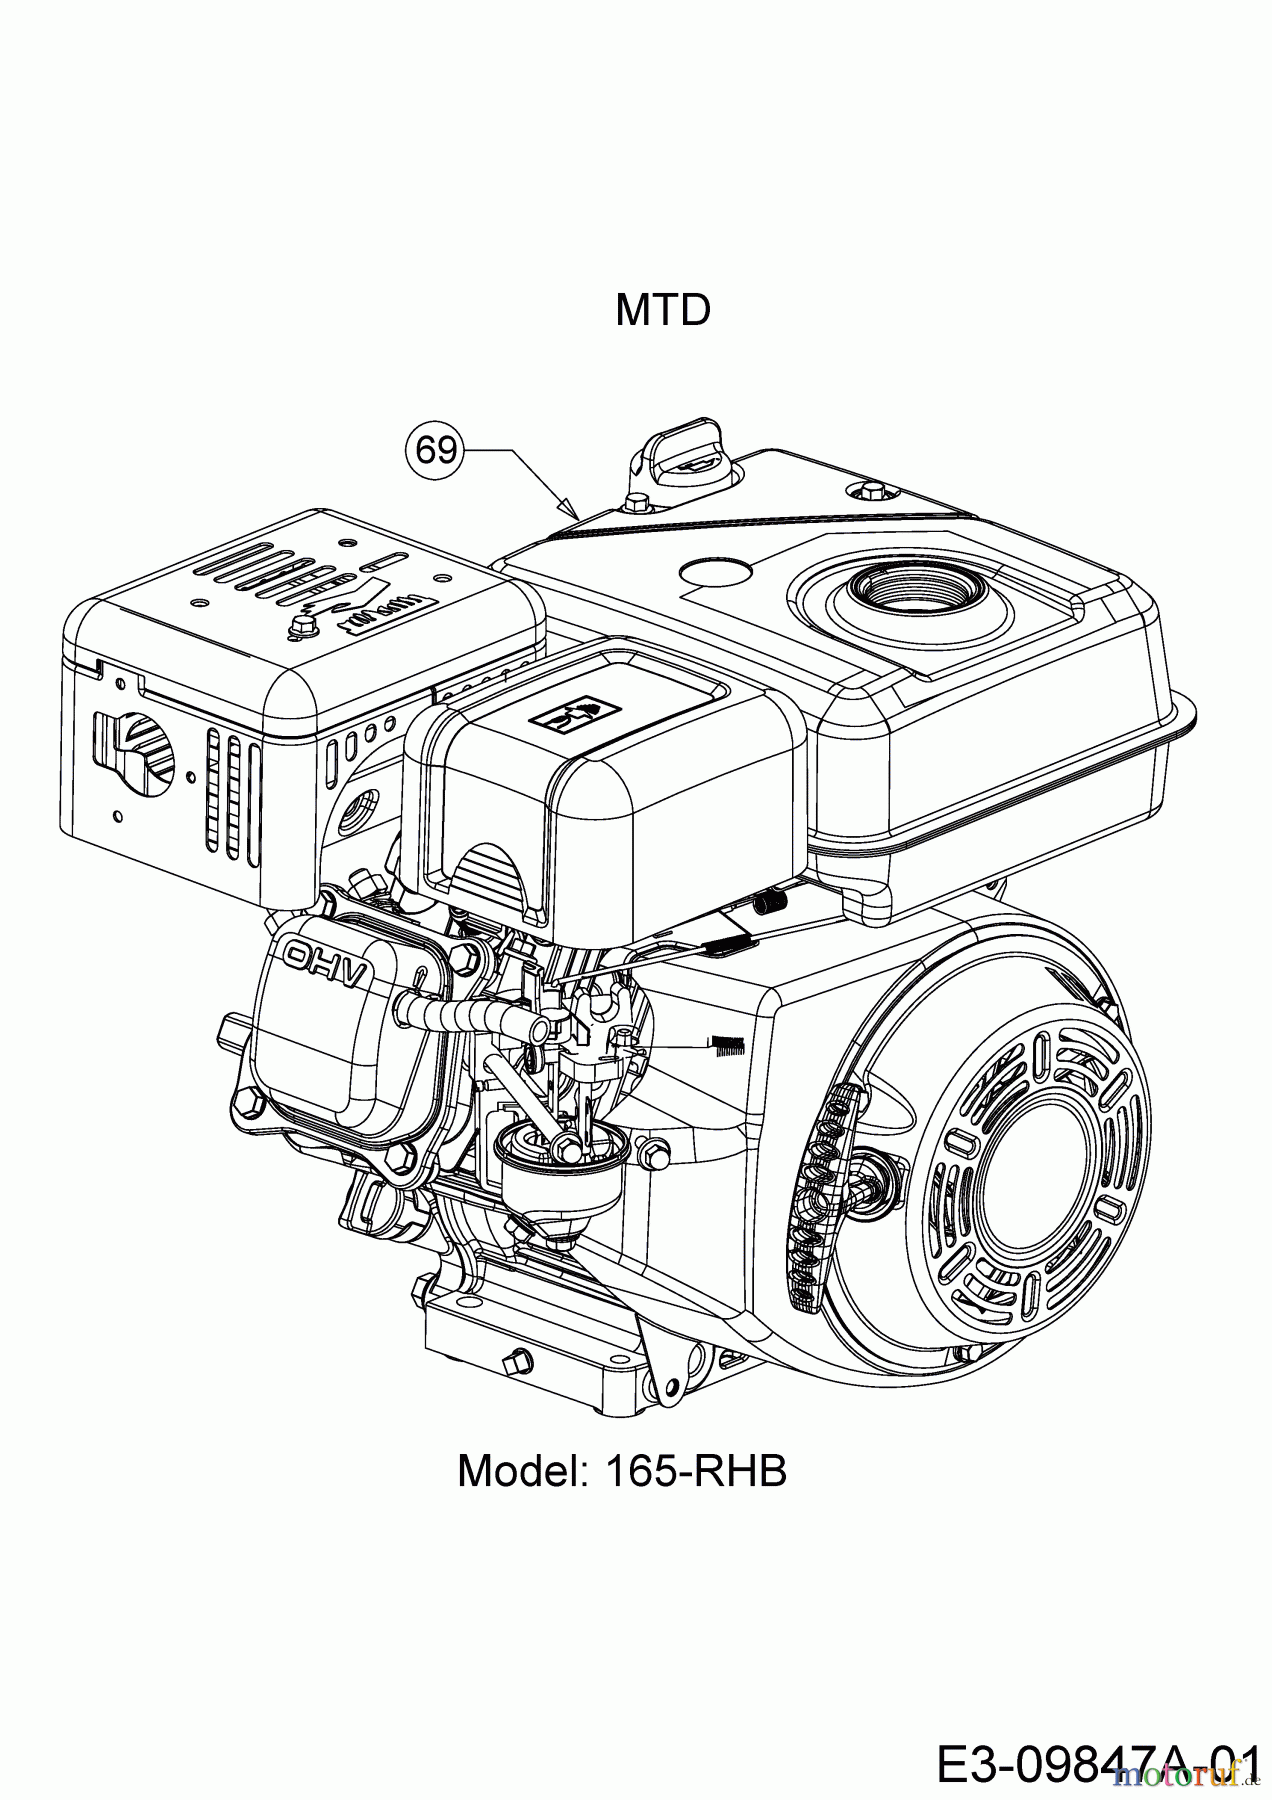  MTD Tillers T/380 M 21D-38MT678  (2016) Engine MTD